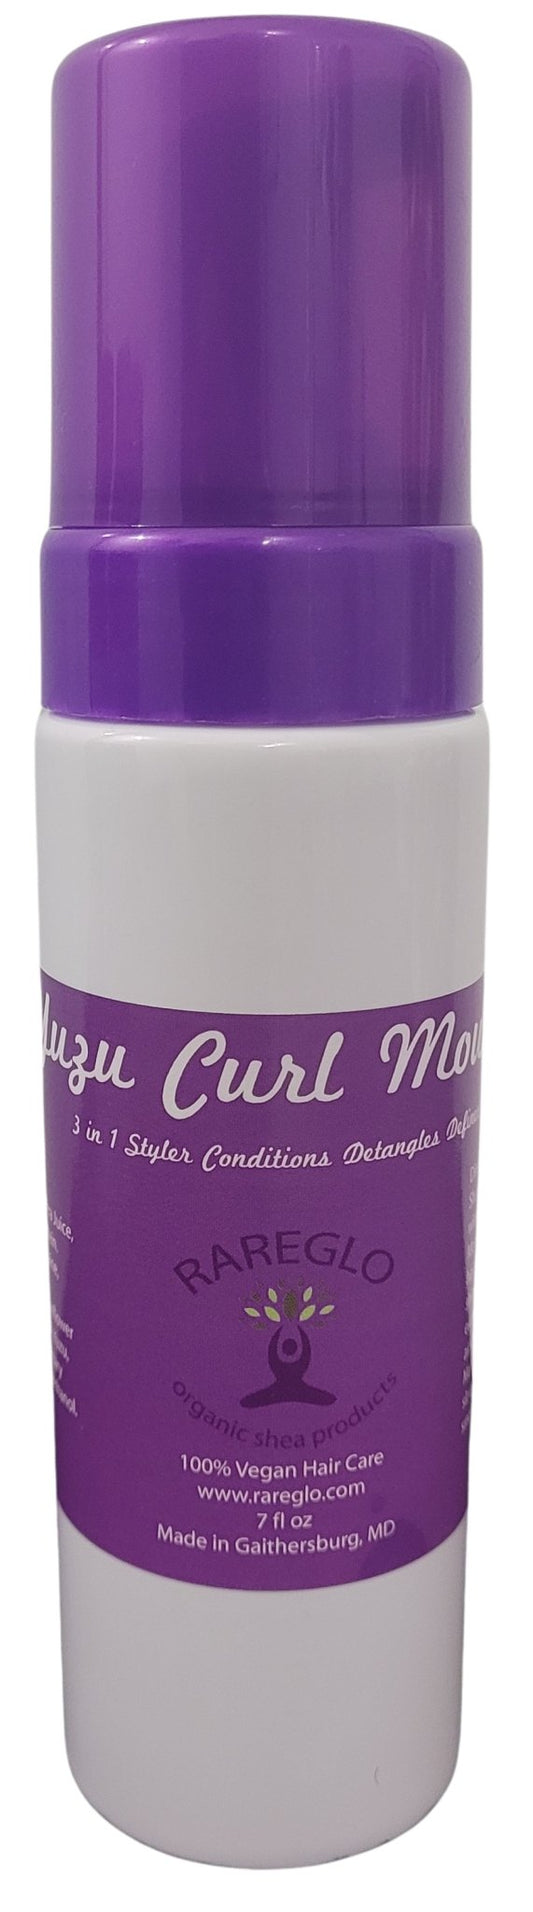 Yuzu Curl Mousse - RareGlo Organic Shea Products